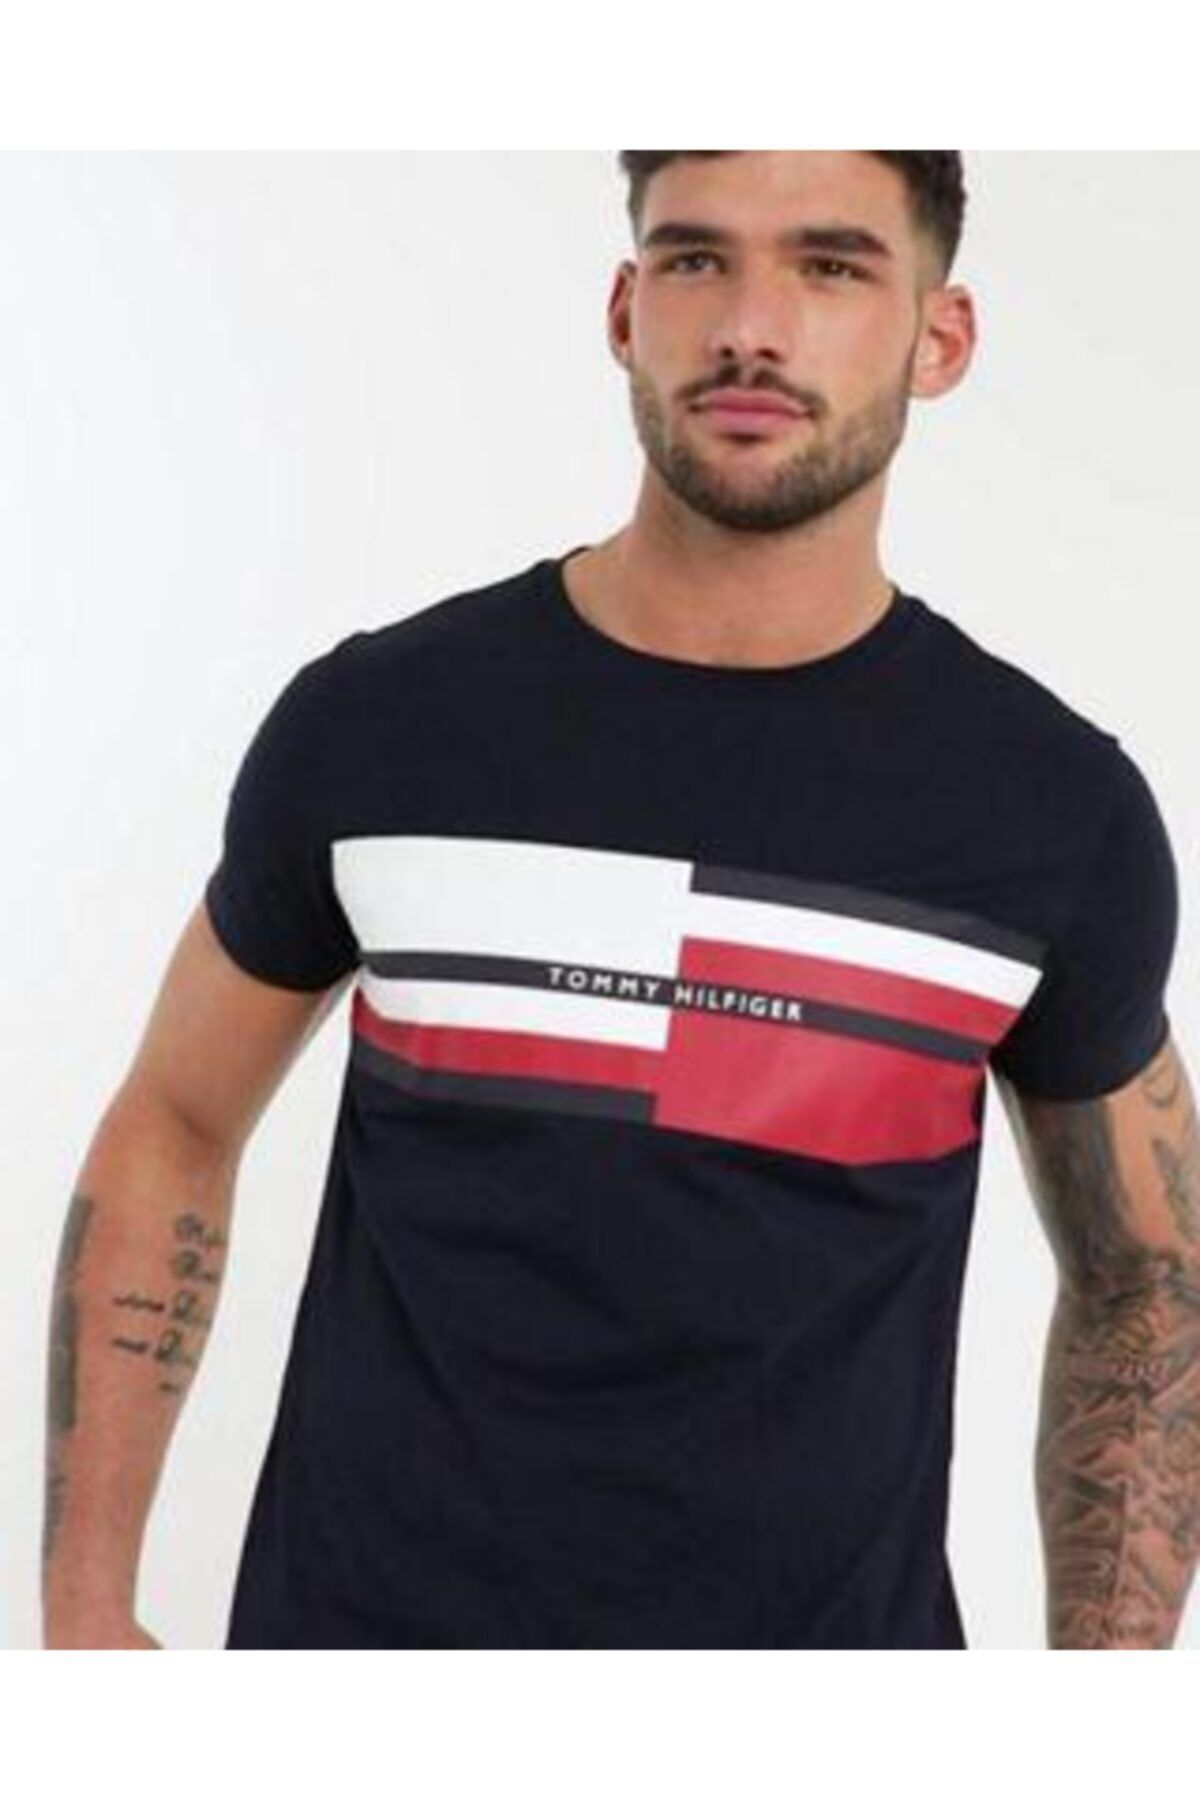 Tommy Hilfiger Men's Camiseta Abstrack Stripe Tee Erkek T-shirt